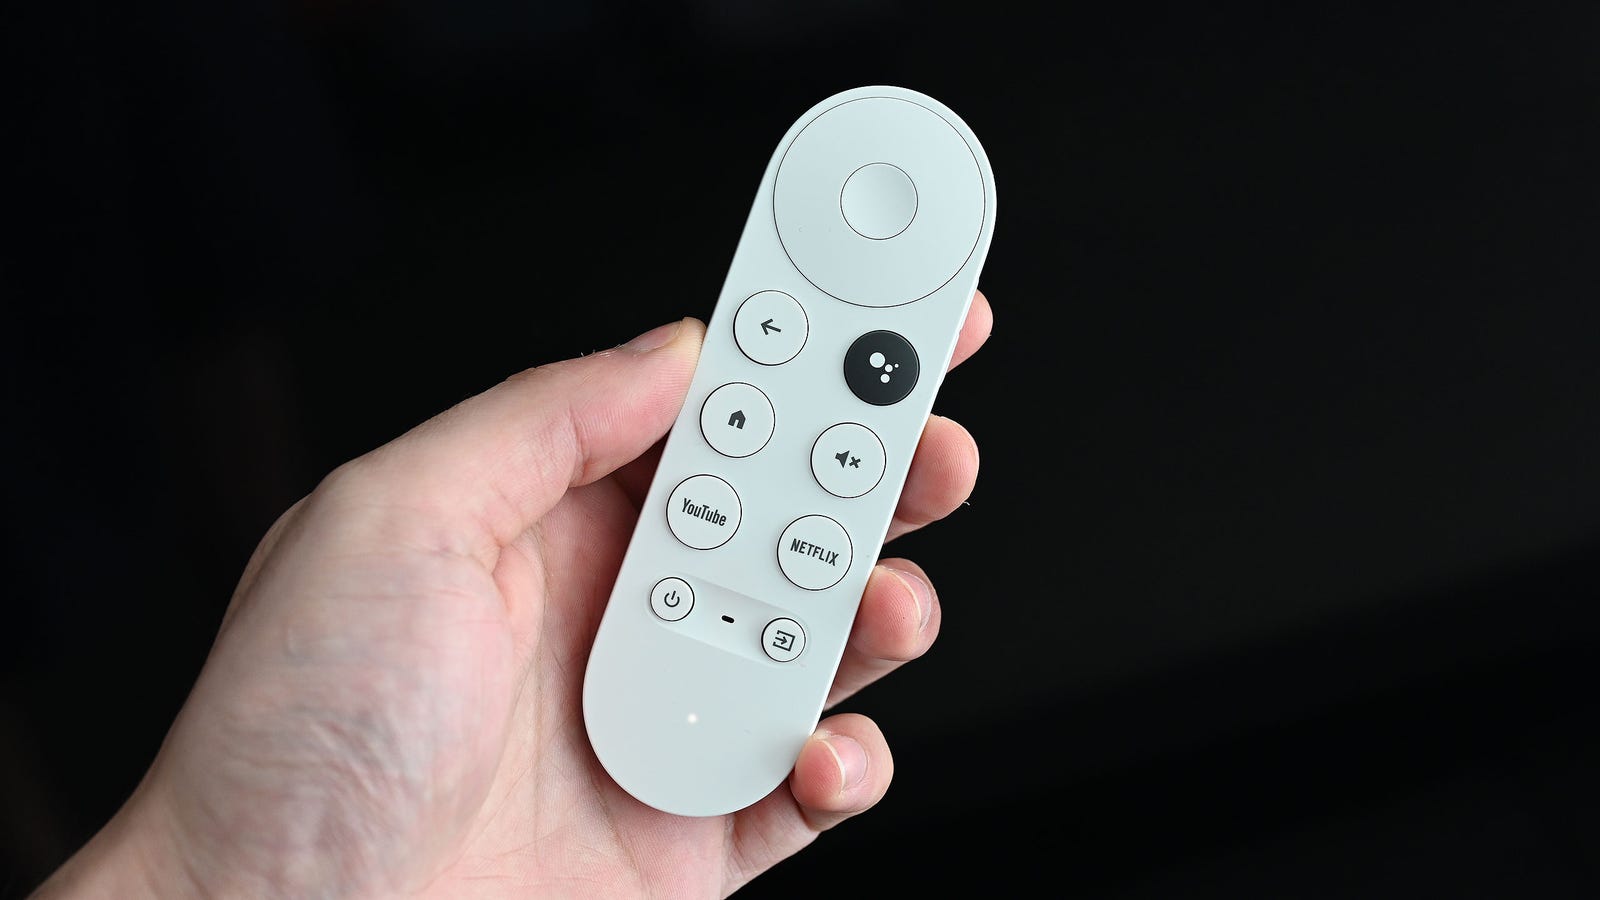 chromecast remote buttons explained